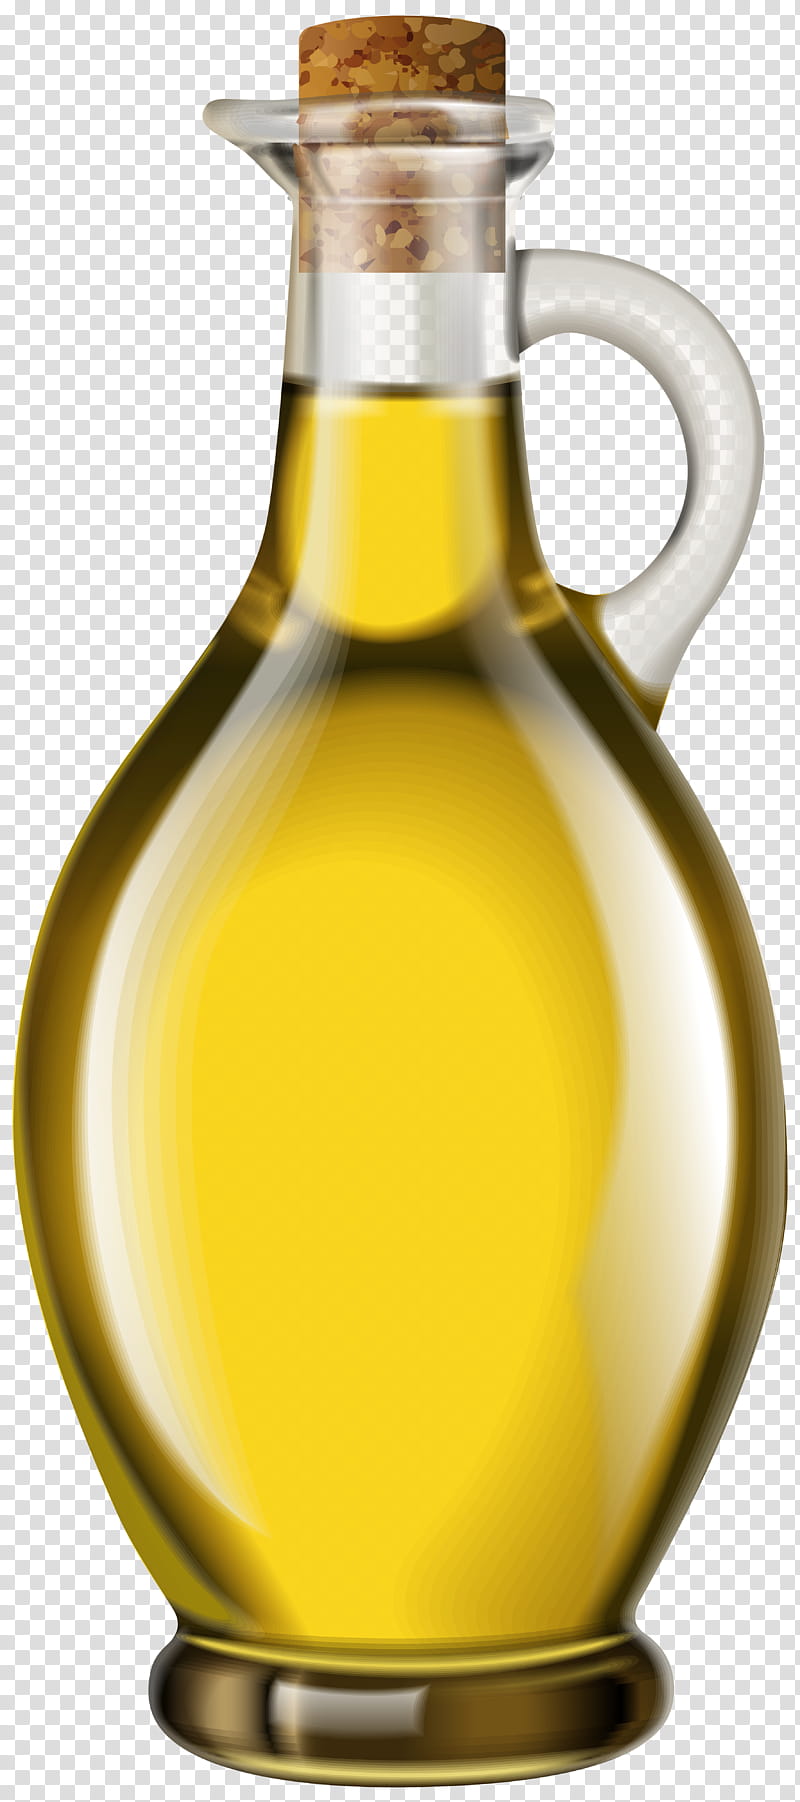 Olive Oil, Soybean Oil, Cooking Oils, Vegetable Oil, Barware, Glass Bottle, Liquid, Serveware transparent background PNG clipart